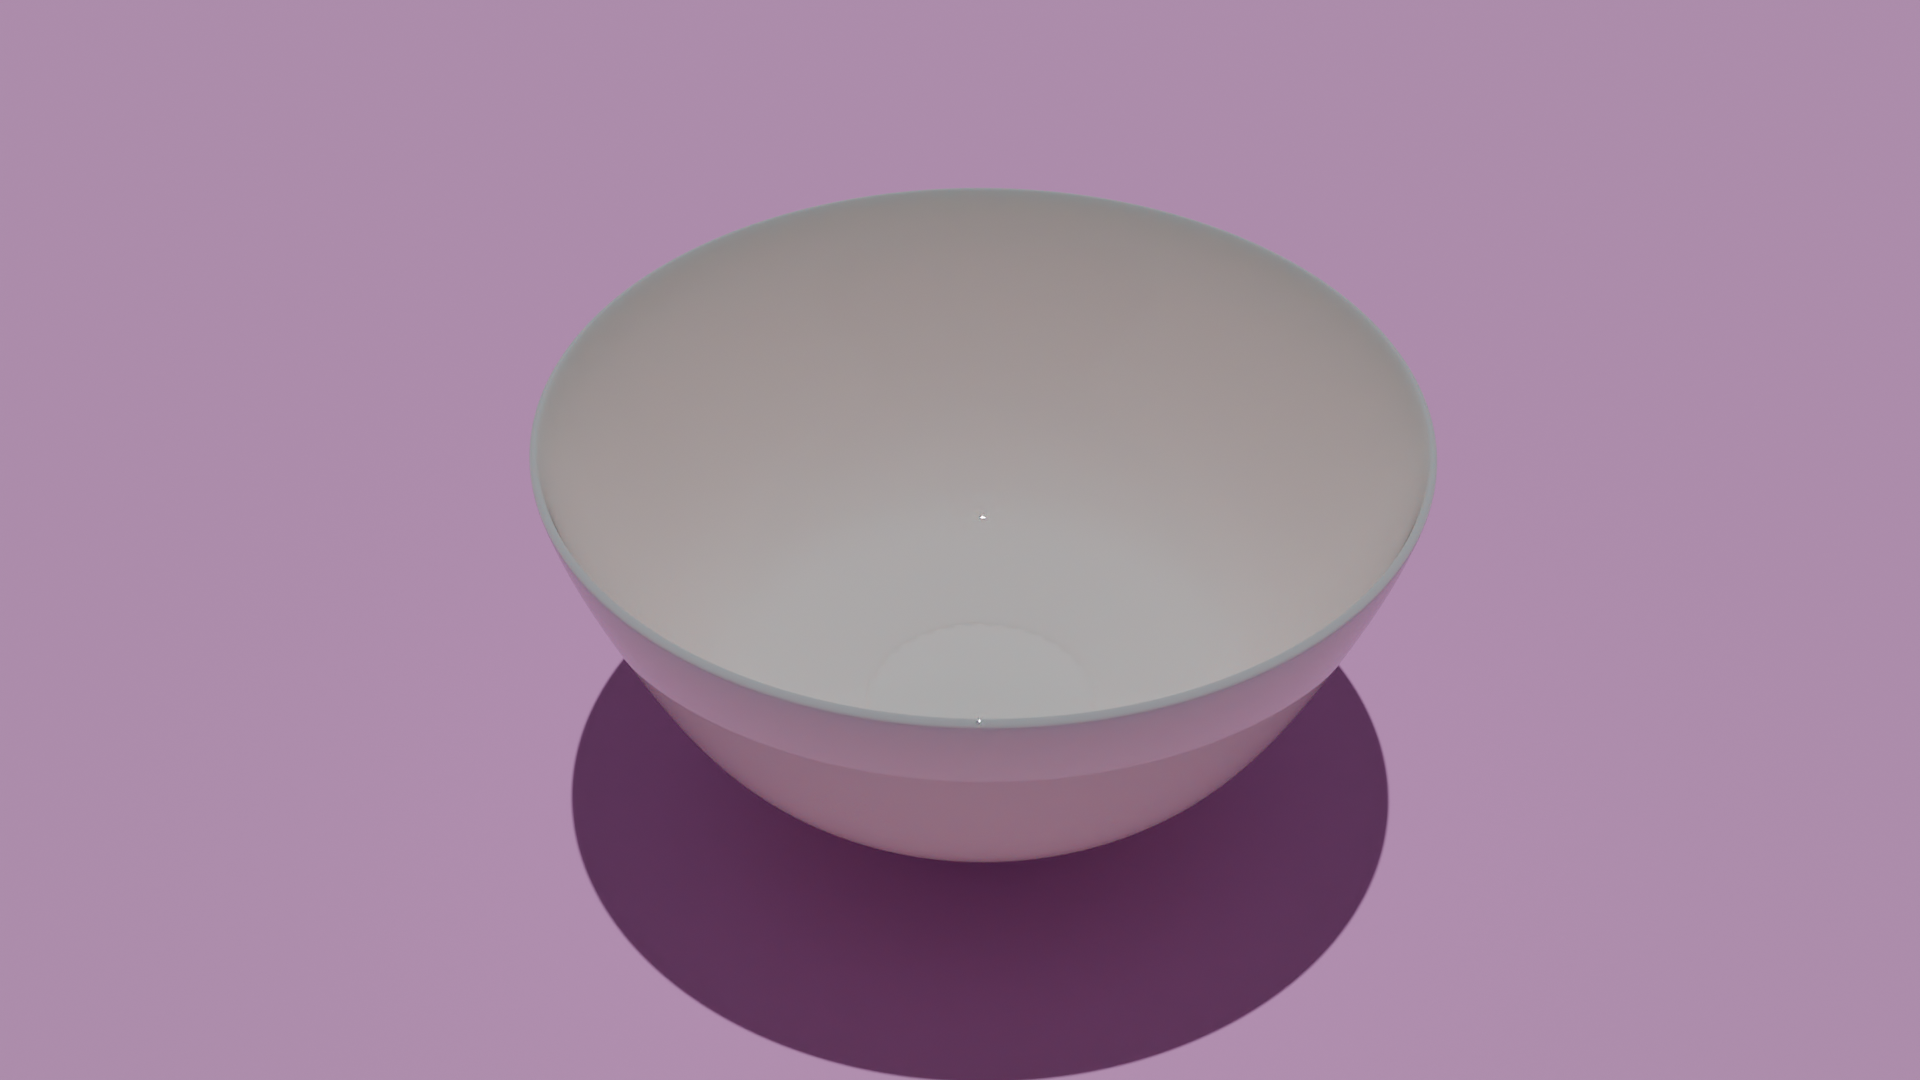 images/gallery/renders/ramen_bowl_porcelain.png